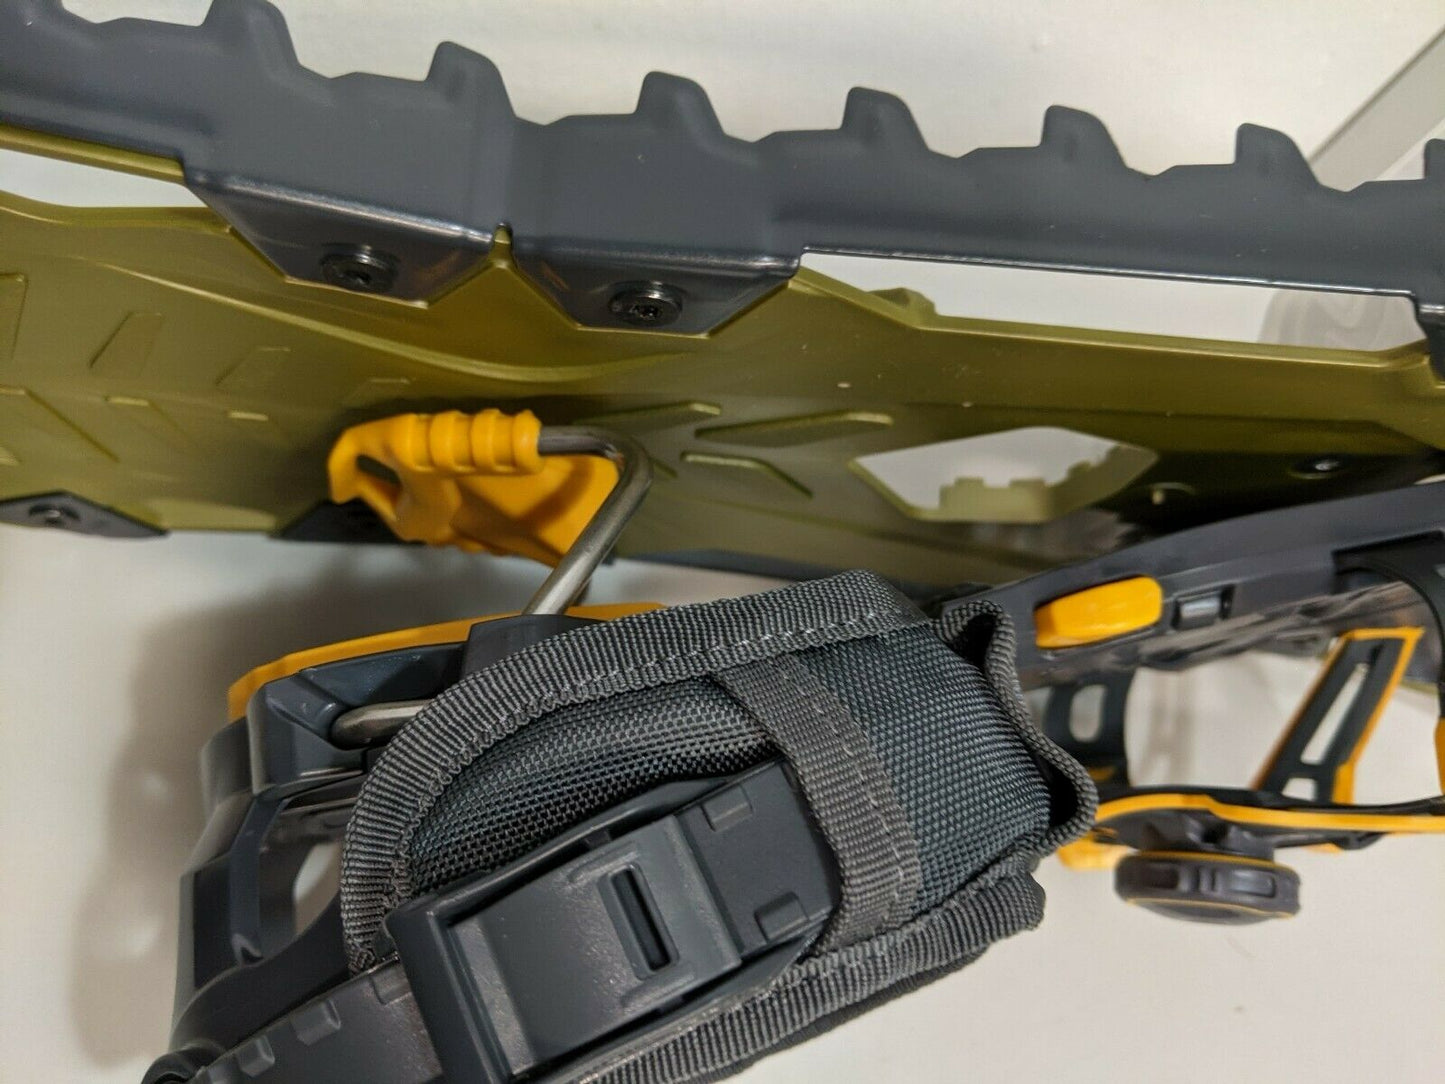 TSL Snowshoes Highlander Adjust Size Small 20 in Color Olive Boa Best Grip, Women Shoe Size 6.5 - 12, 180 LB Max, 65 LB Min